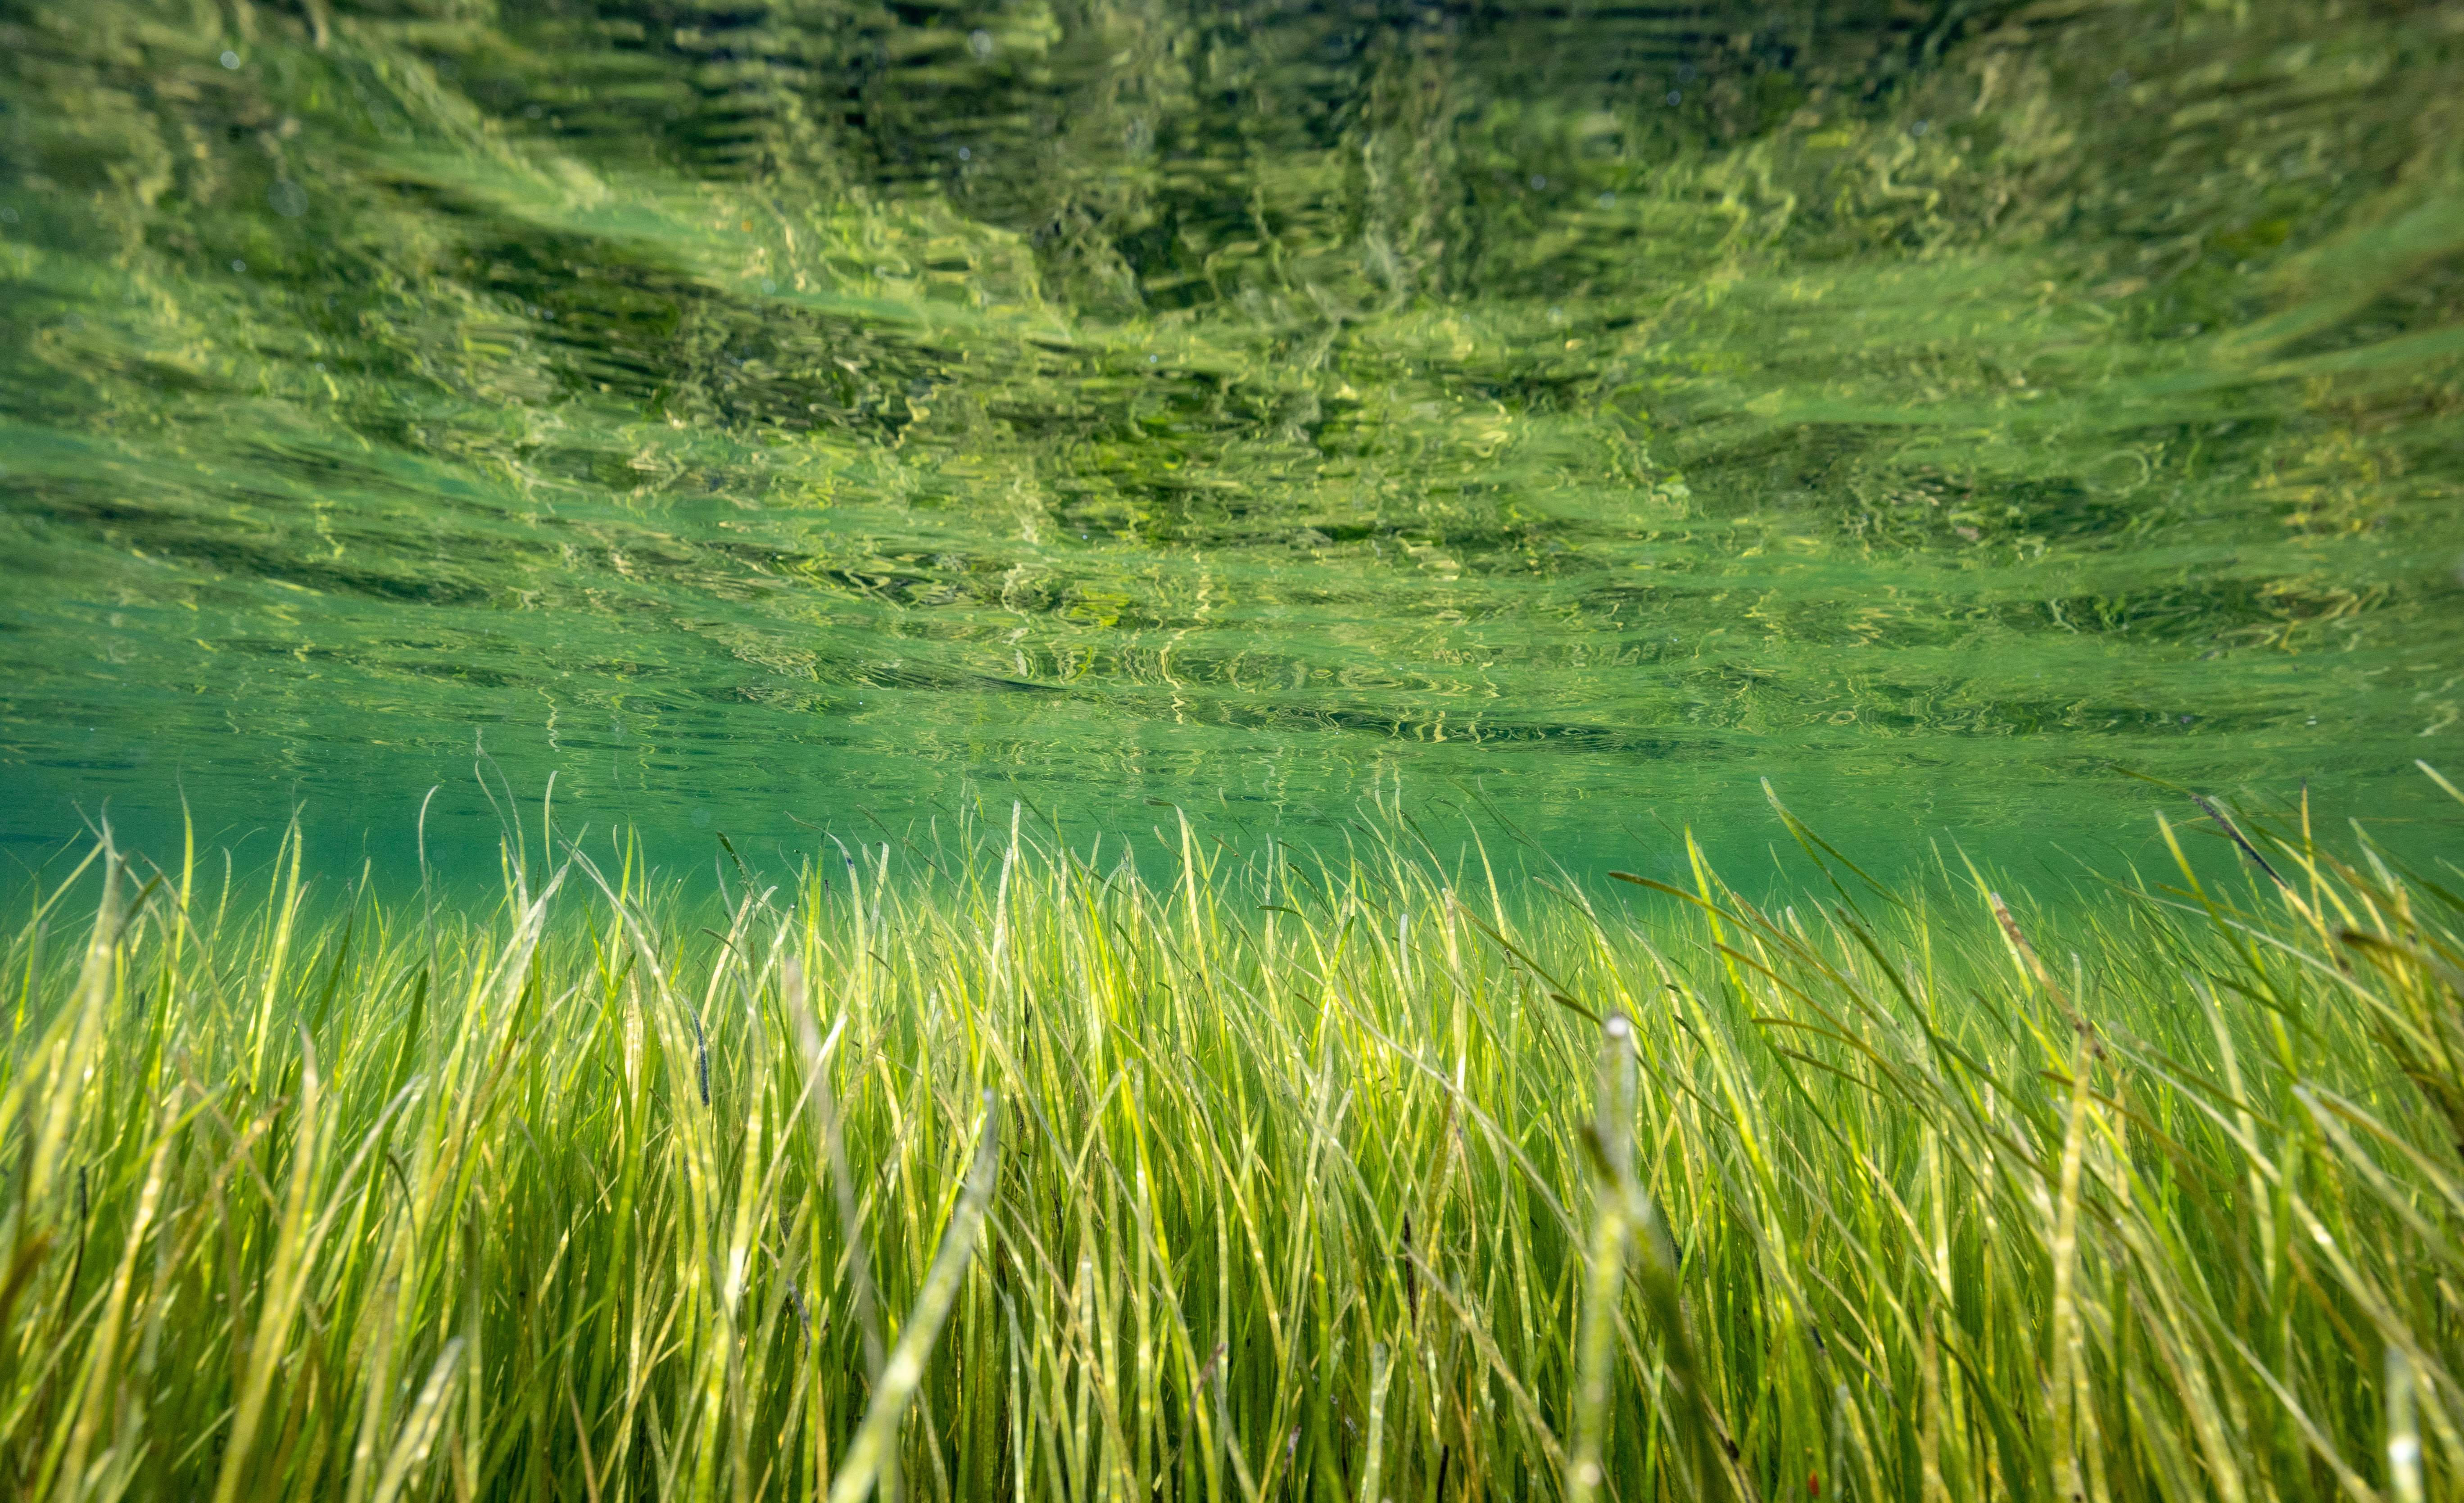 An underwater photo of an eelgrass meadow.